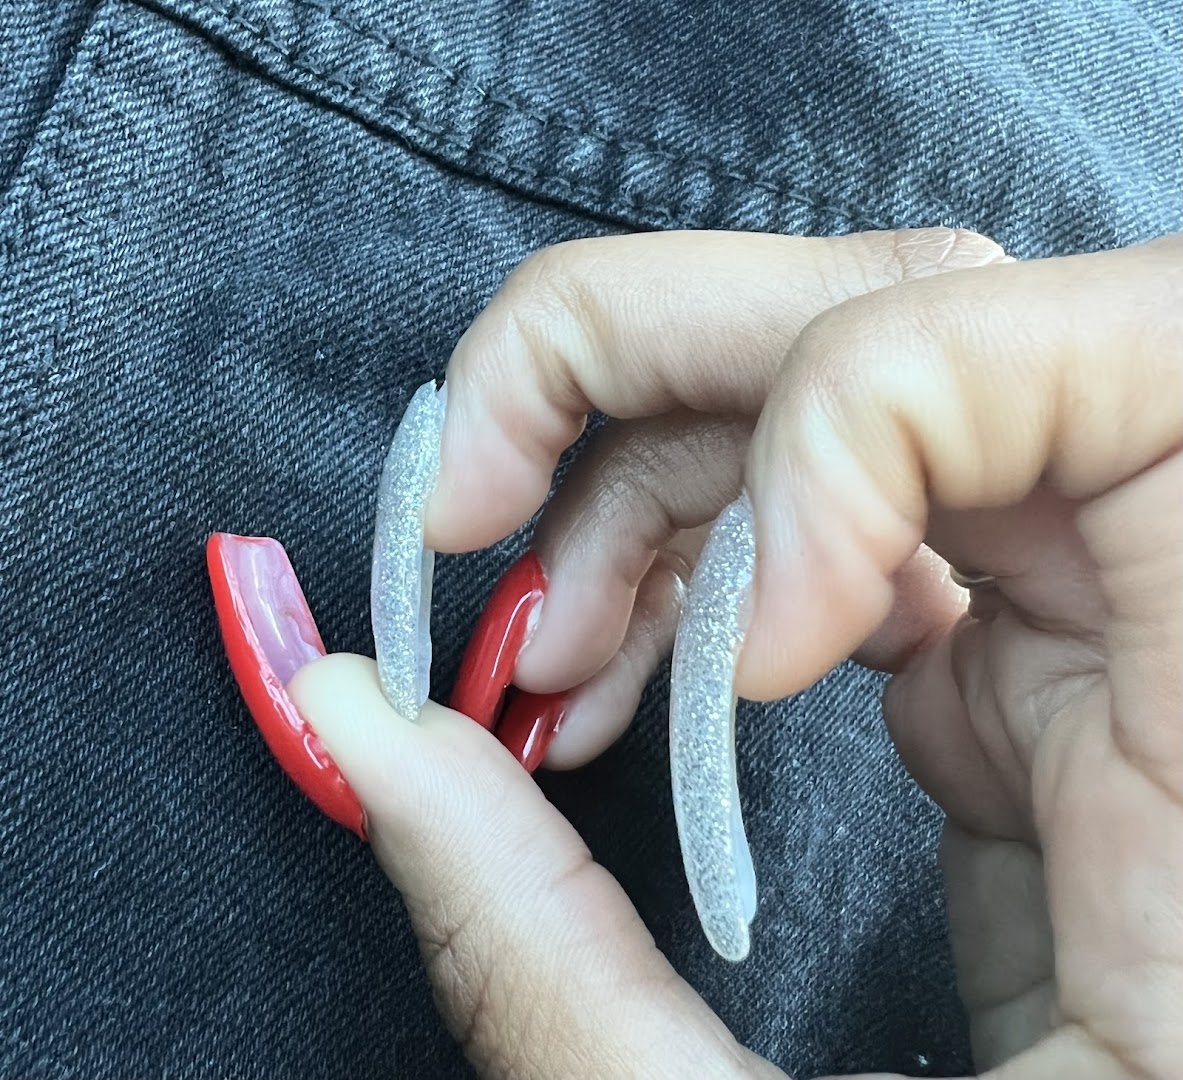 Modern Nails